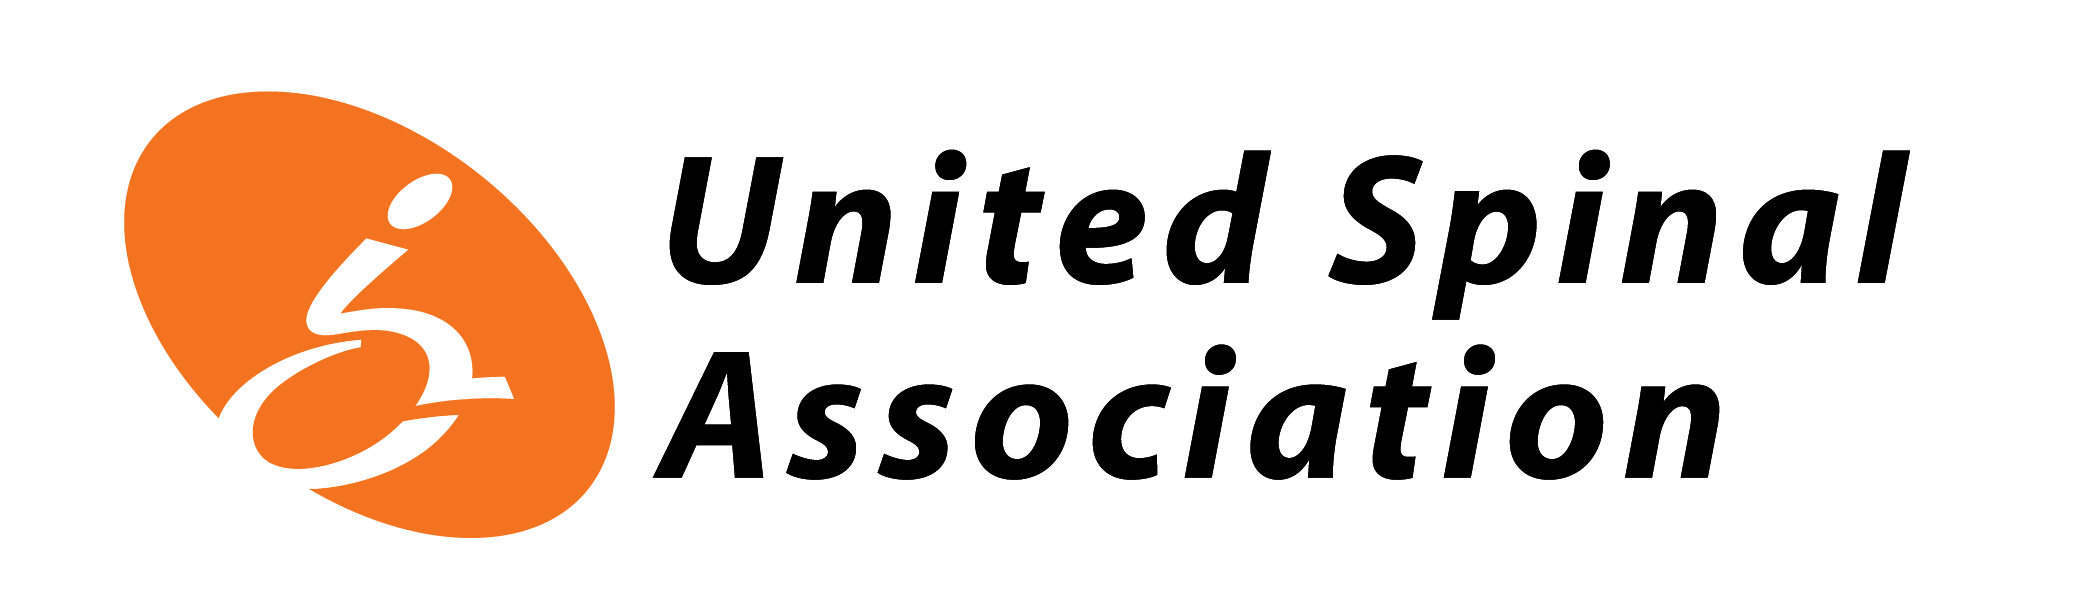 United Spinal Association Logo